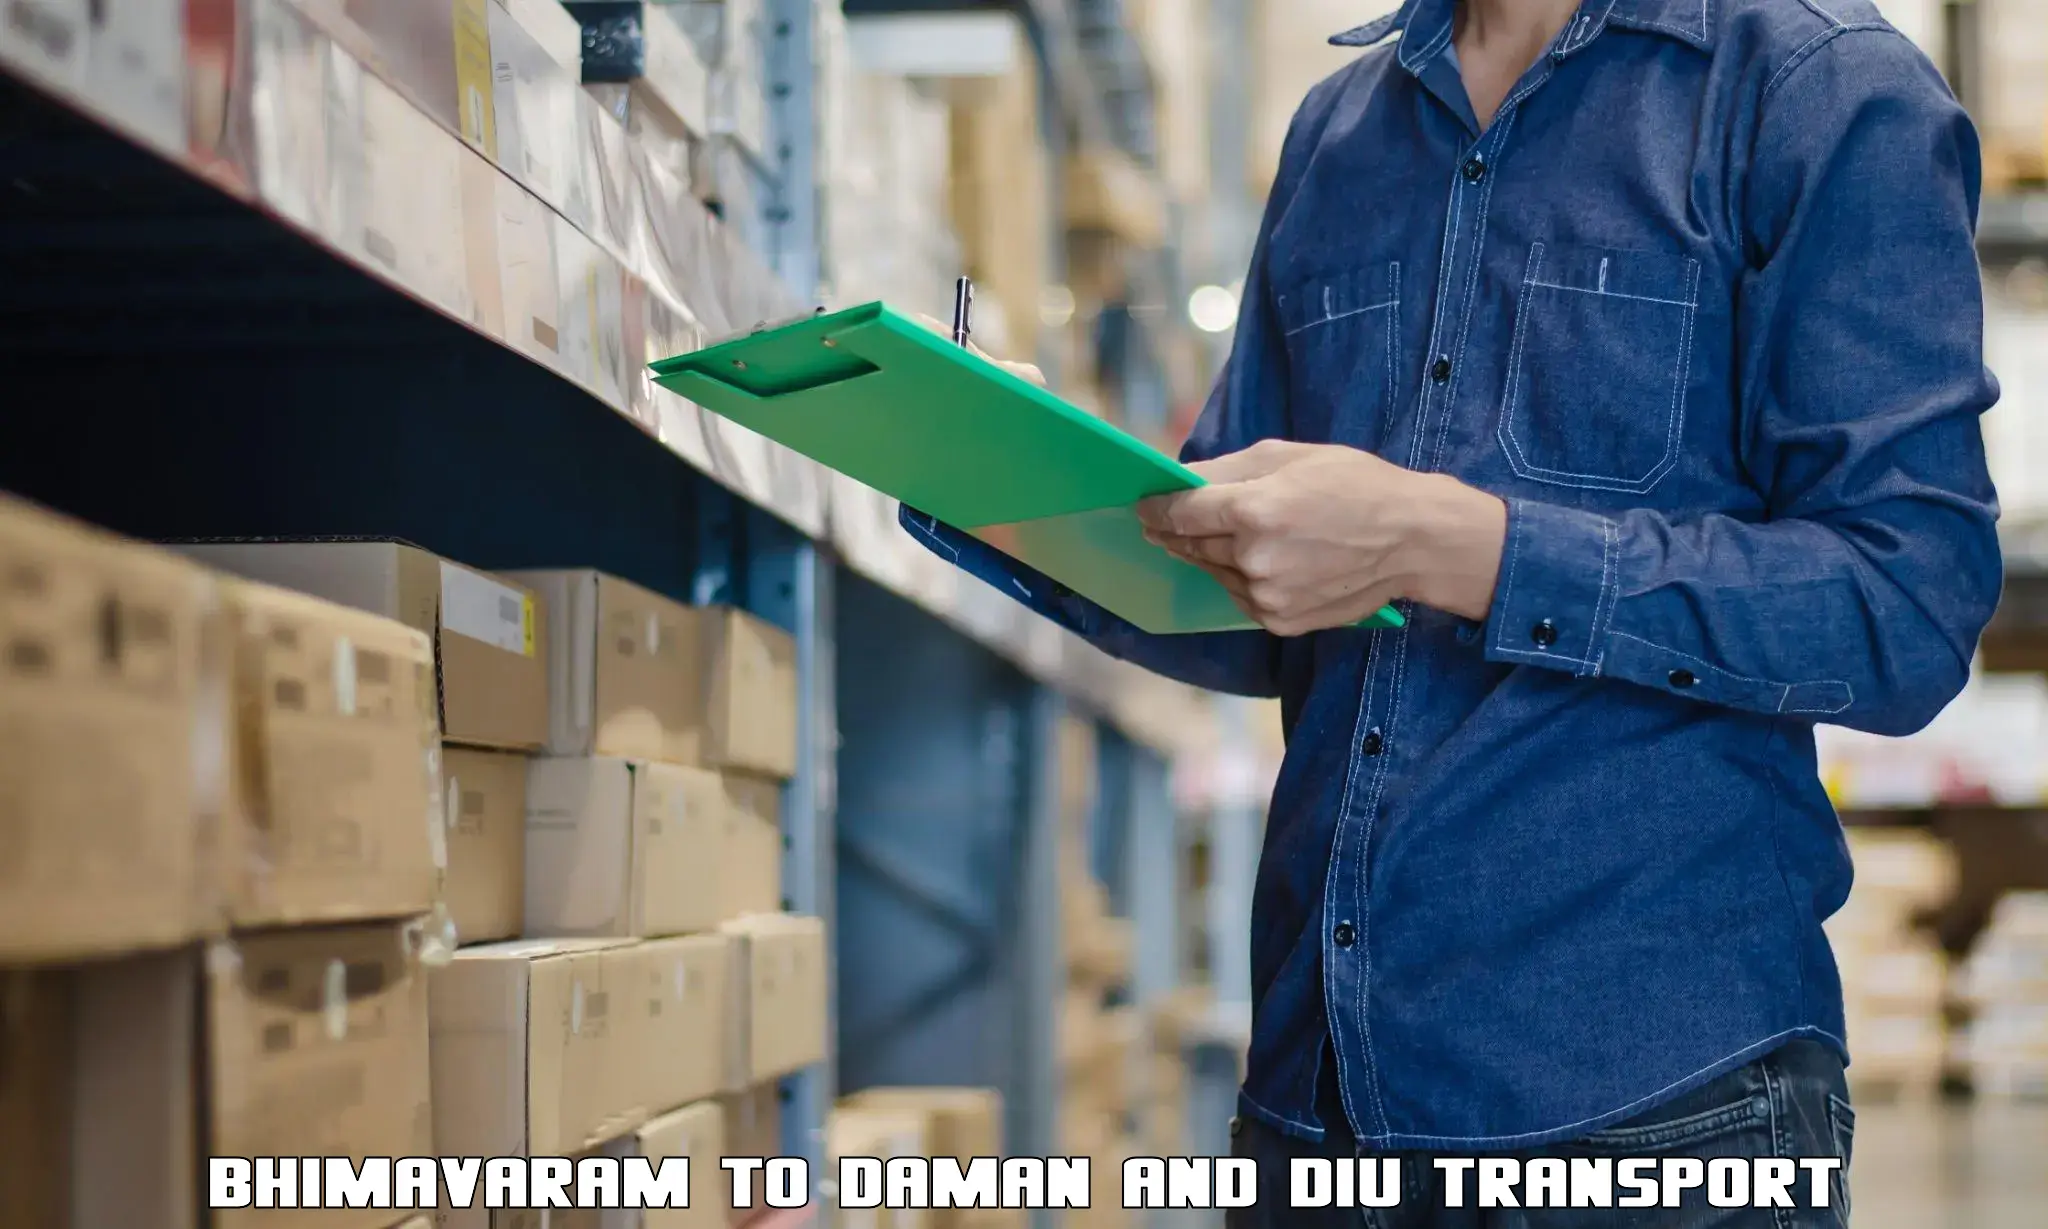 Delivery service Bhimavaram to Daman and Diu